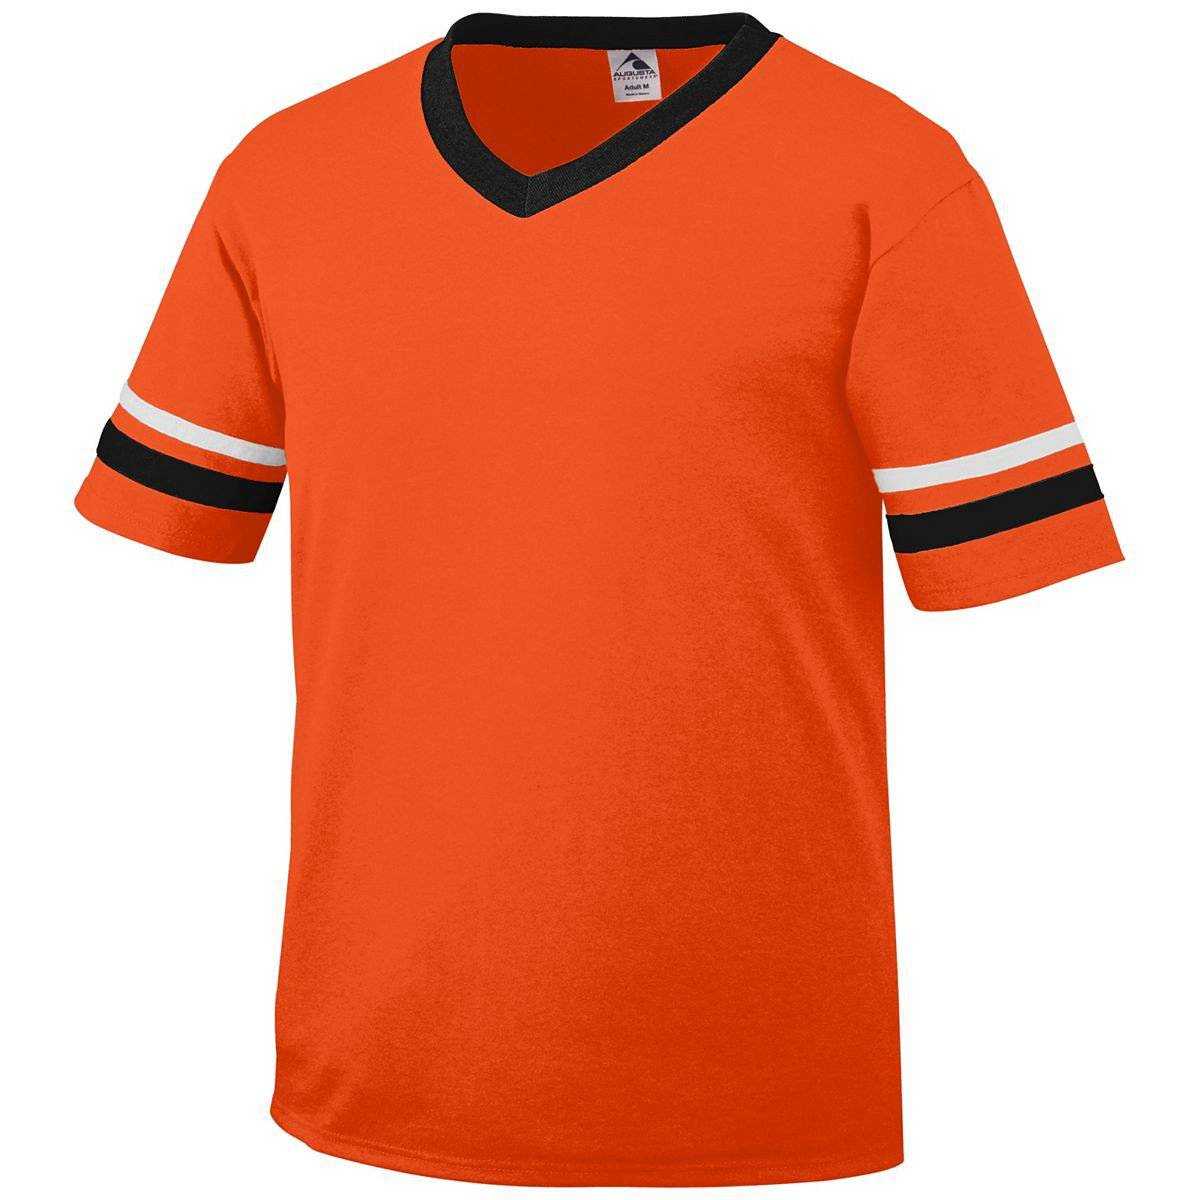 Augusta 360 Sleeve Stripe Jersey - Orange Black White - HIT a Double